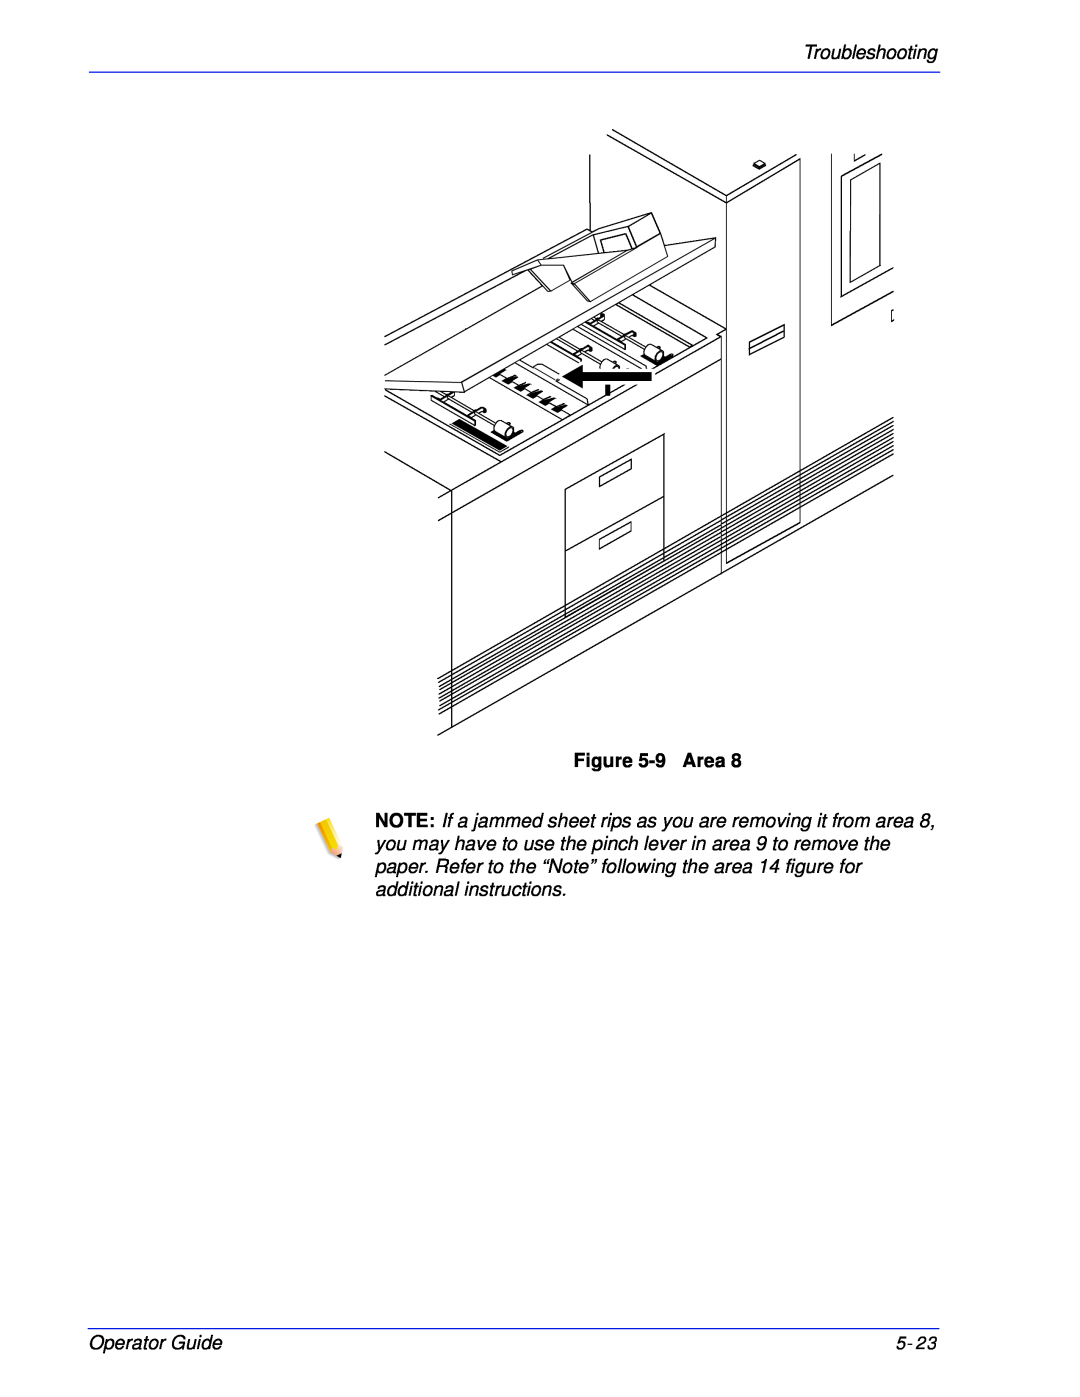 Xerox 180 EPS, 100 manual Troubleshooting, 9Area, Operator Guide 